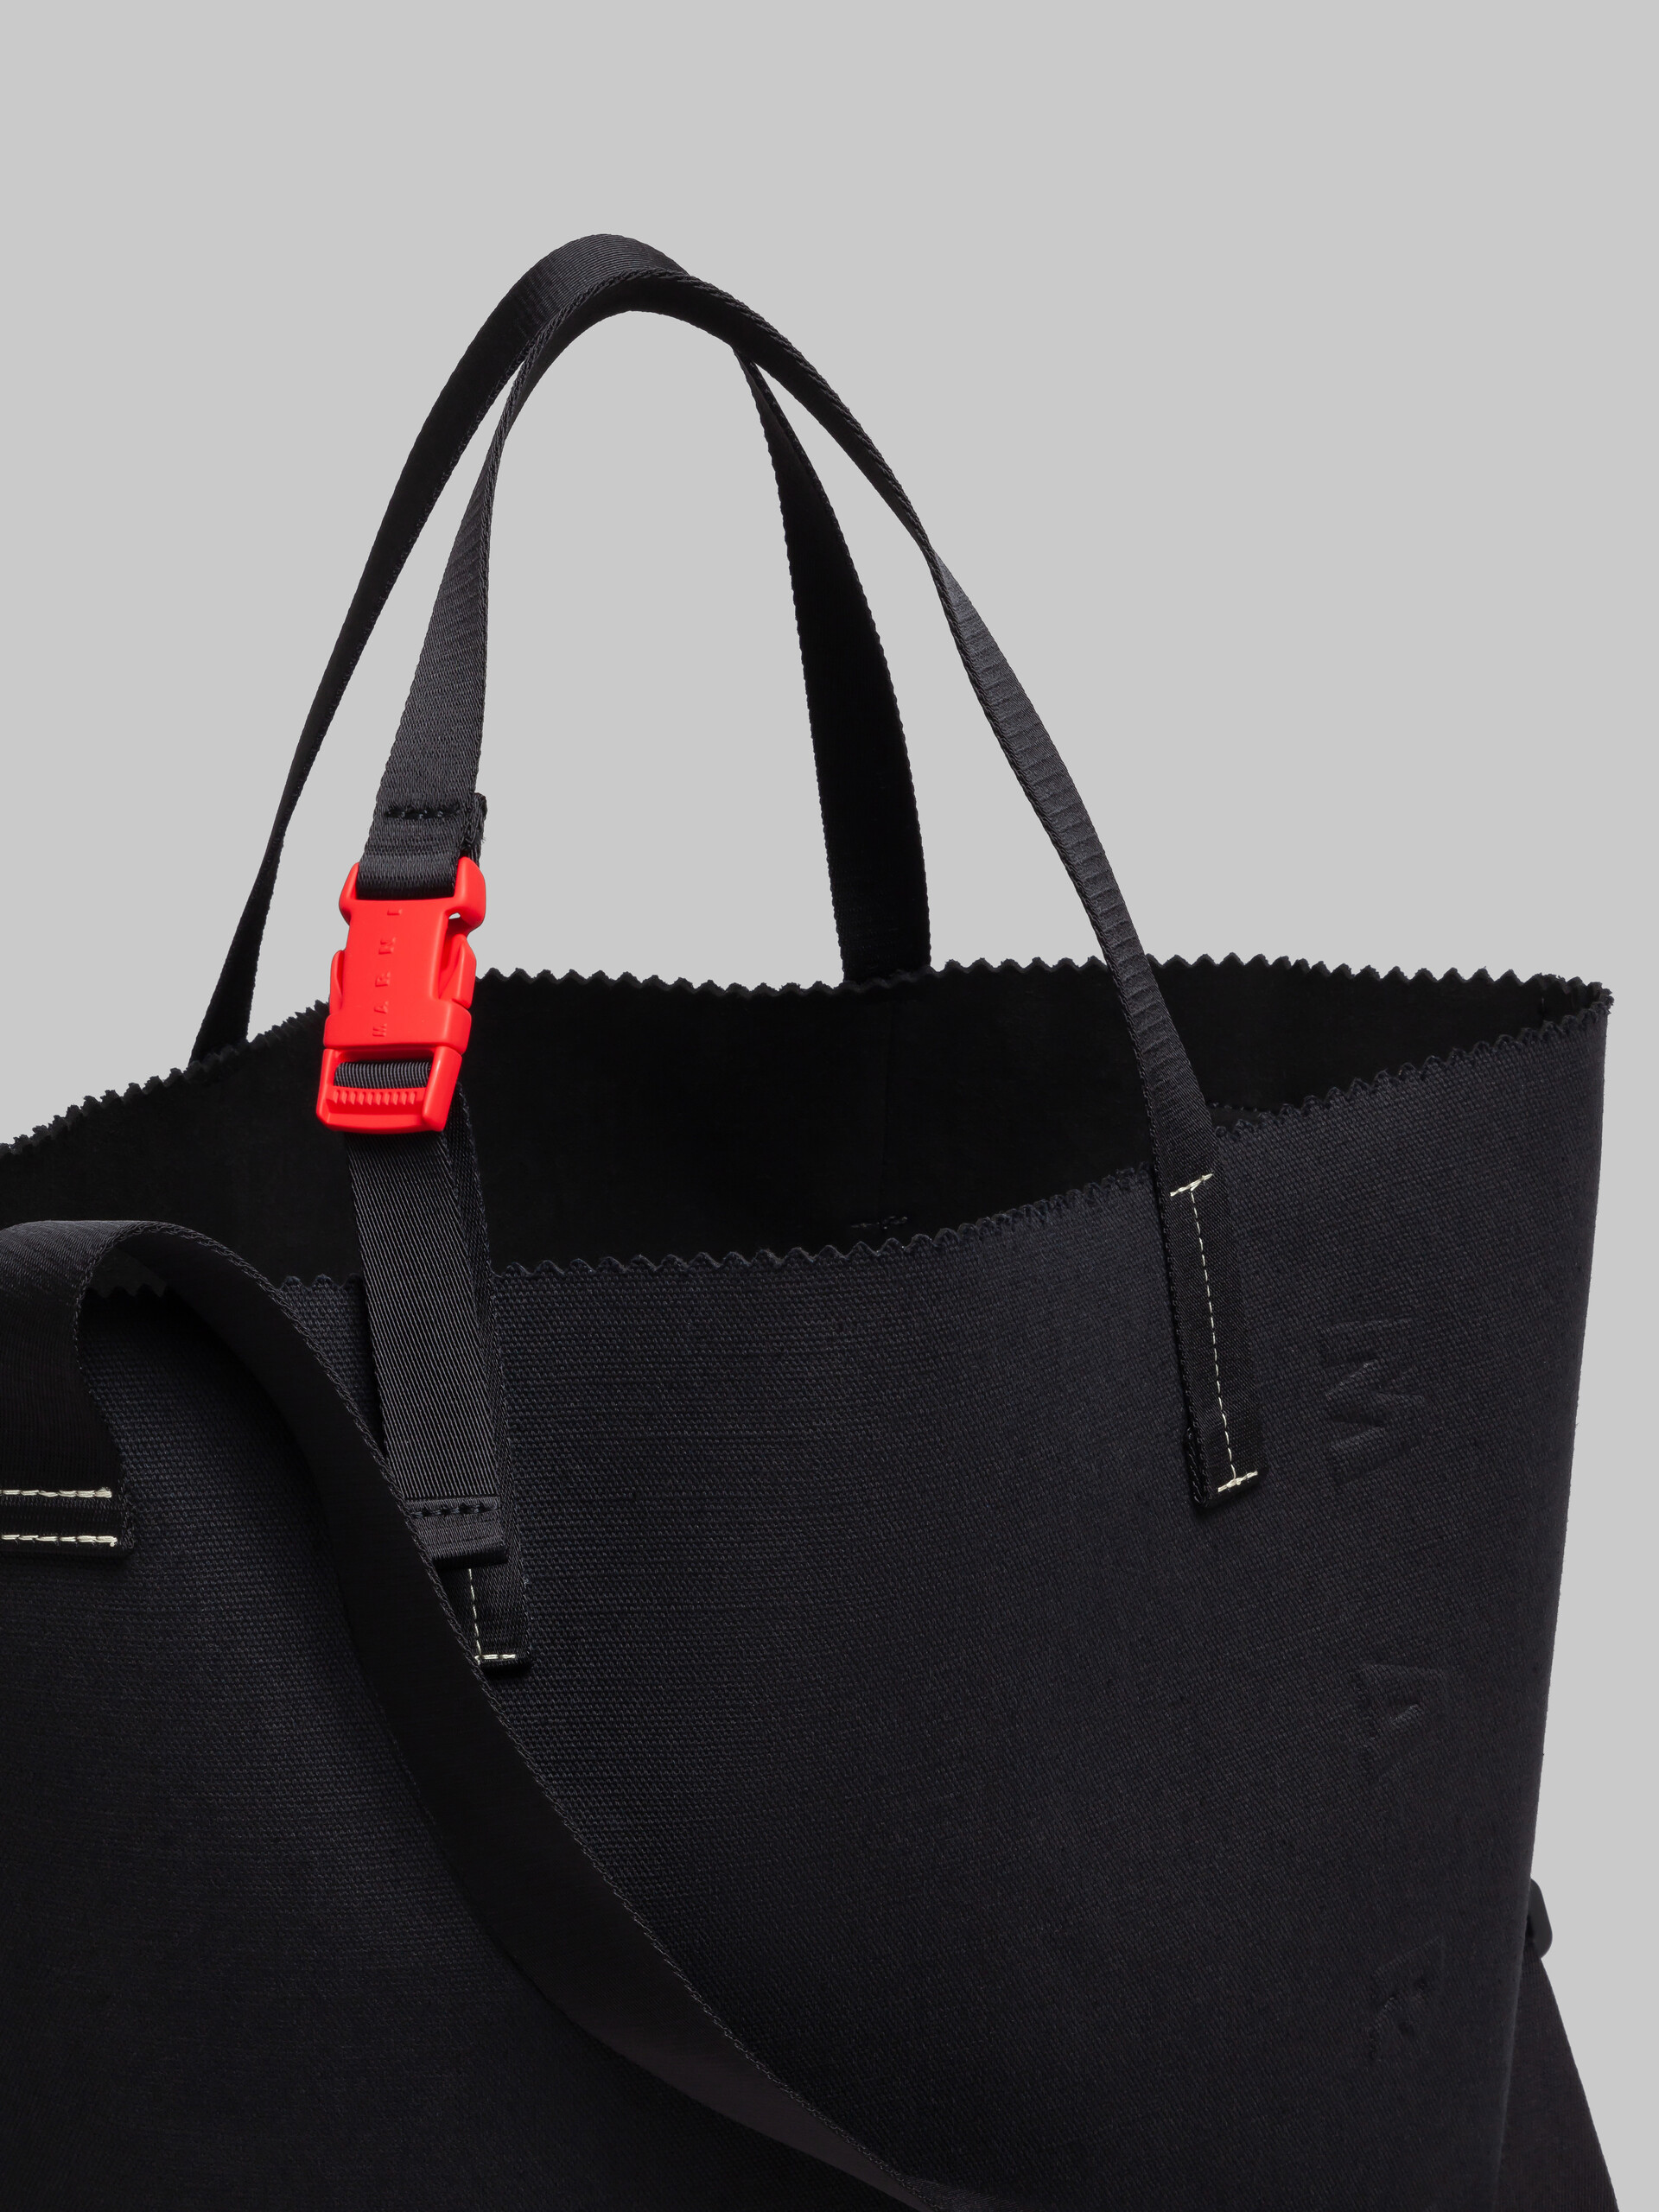 Tribeca Shopping Bag in tela nera con logo Marni in rilievo - Borse shopping - Image 4